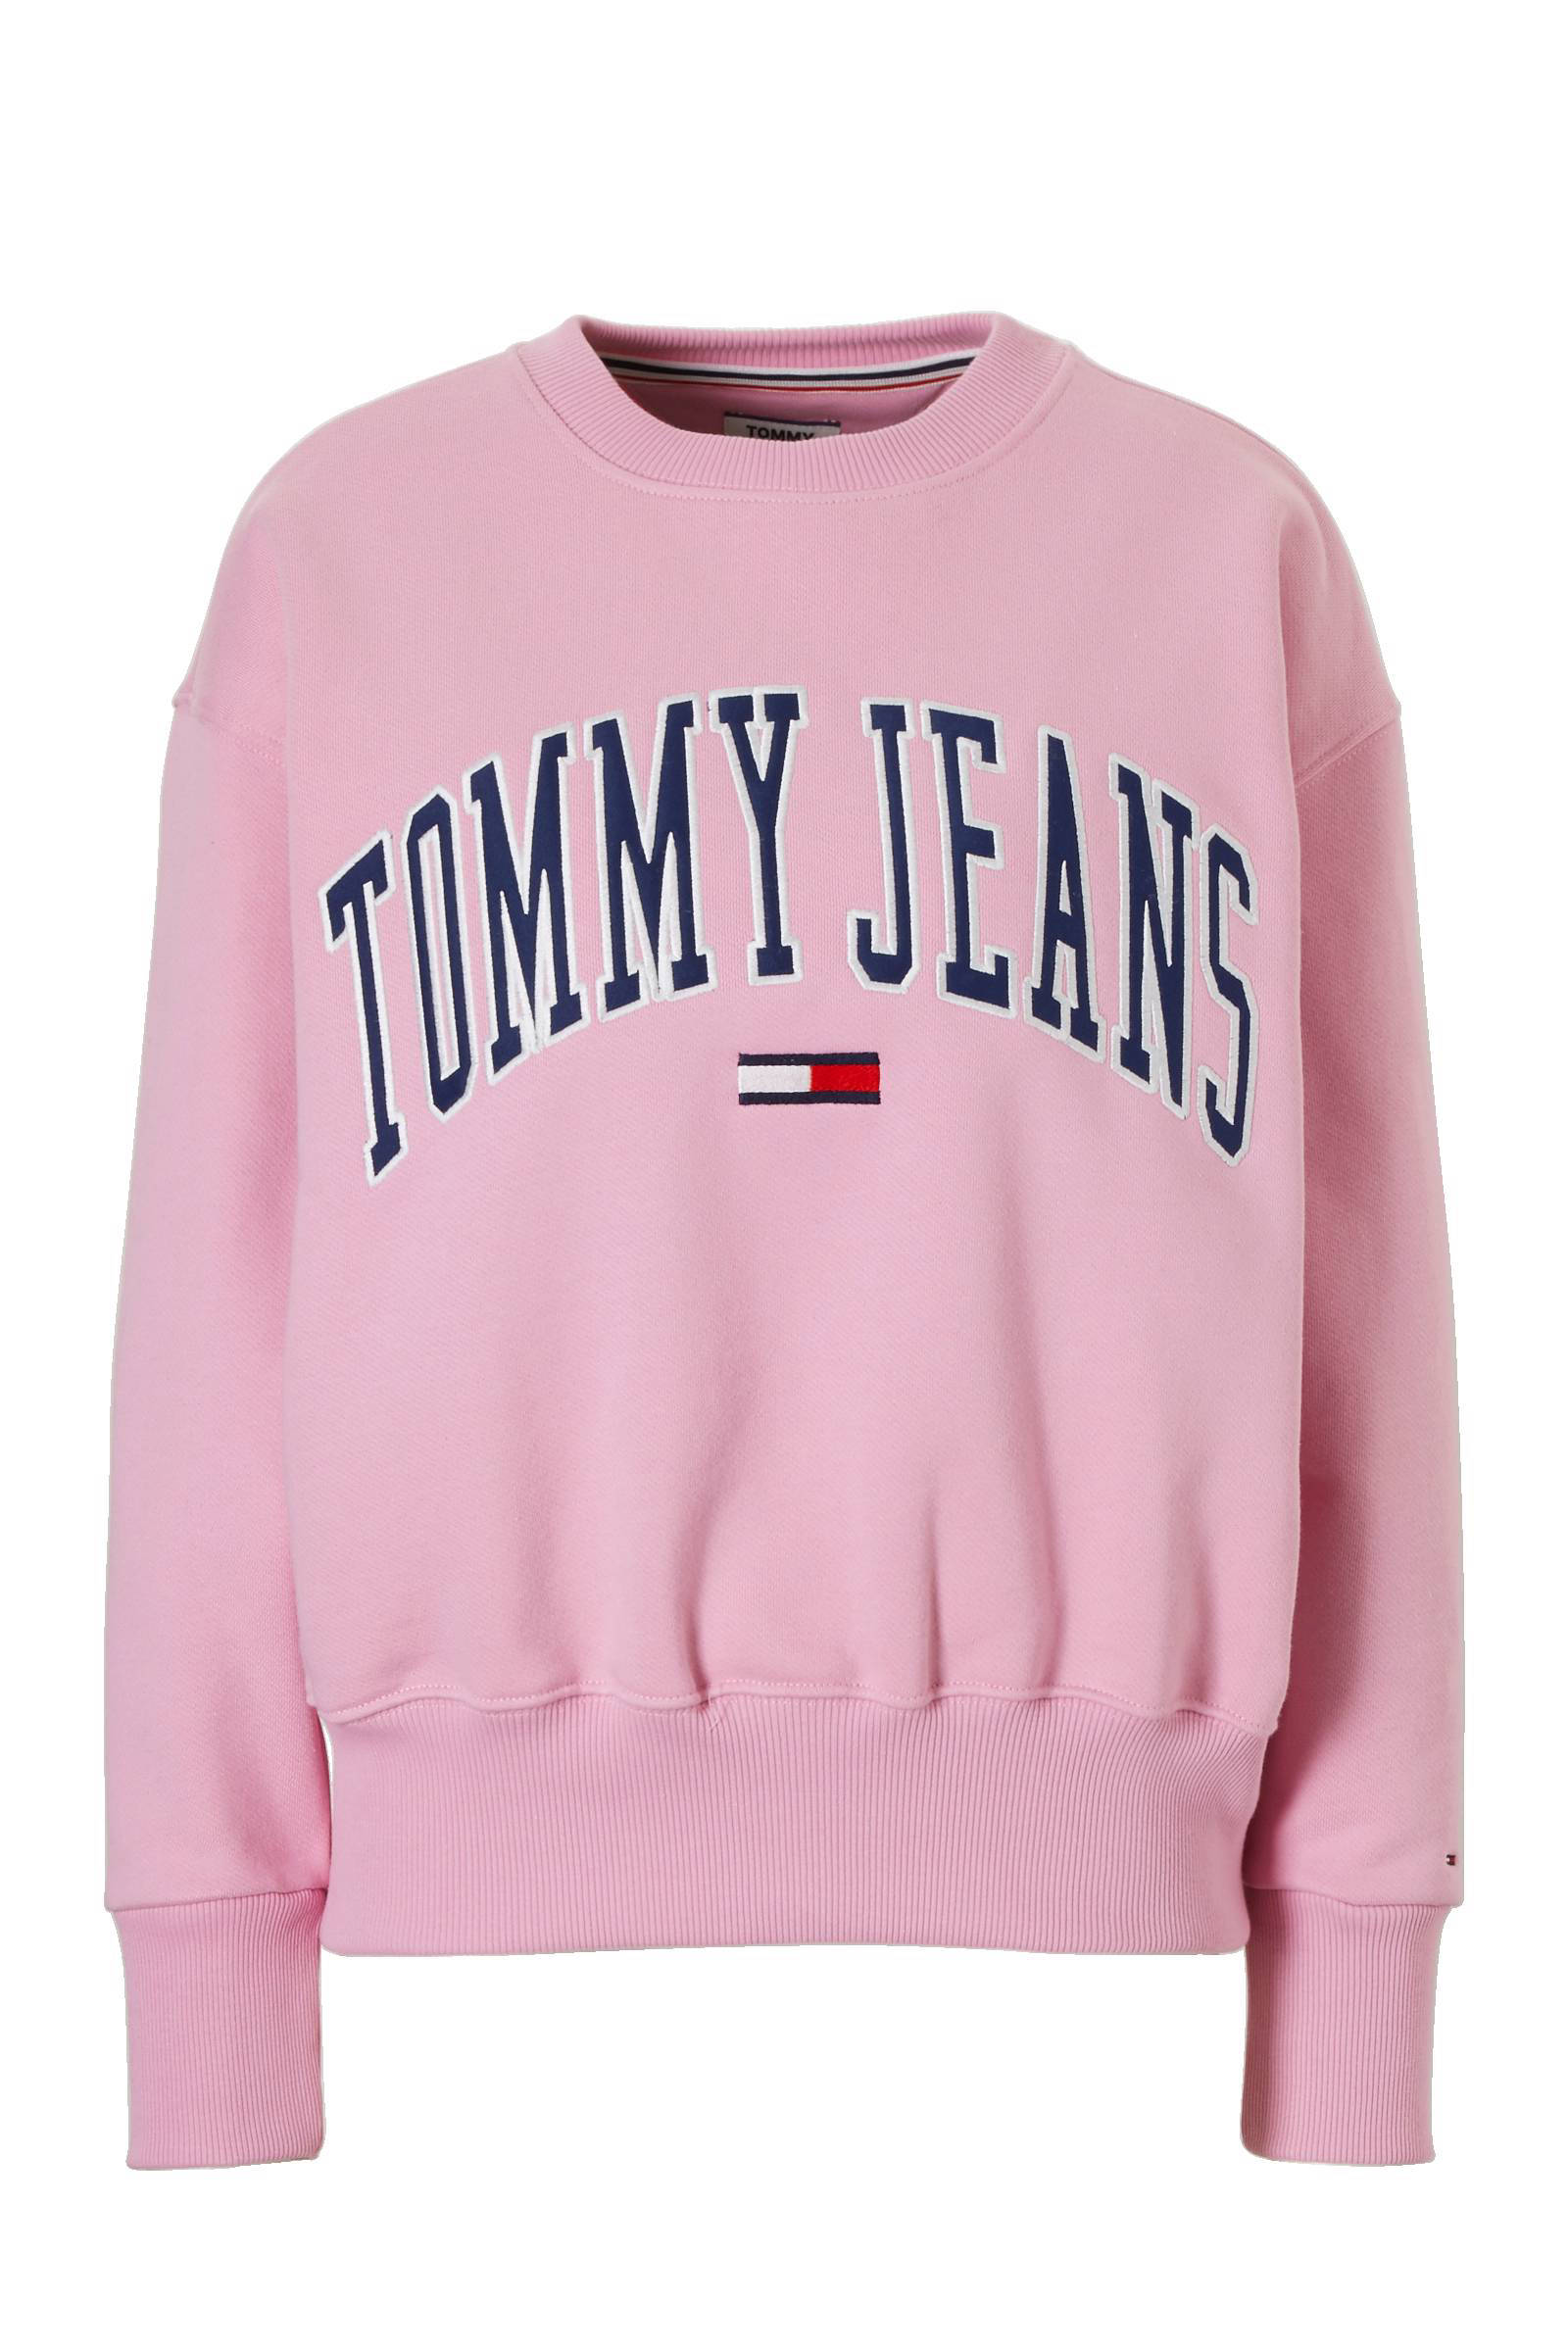 pedaal straal bijvoeglijk naamwoord Tommy Jeans Sweater Dames Online, SAVE 42% - mpgc.net